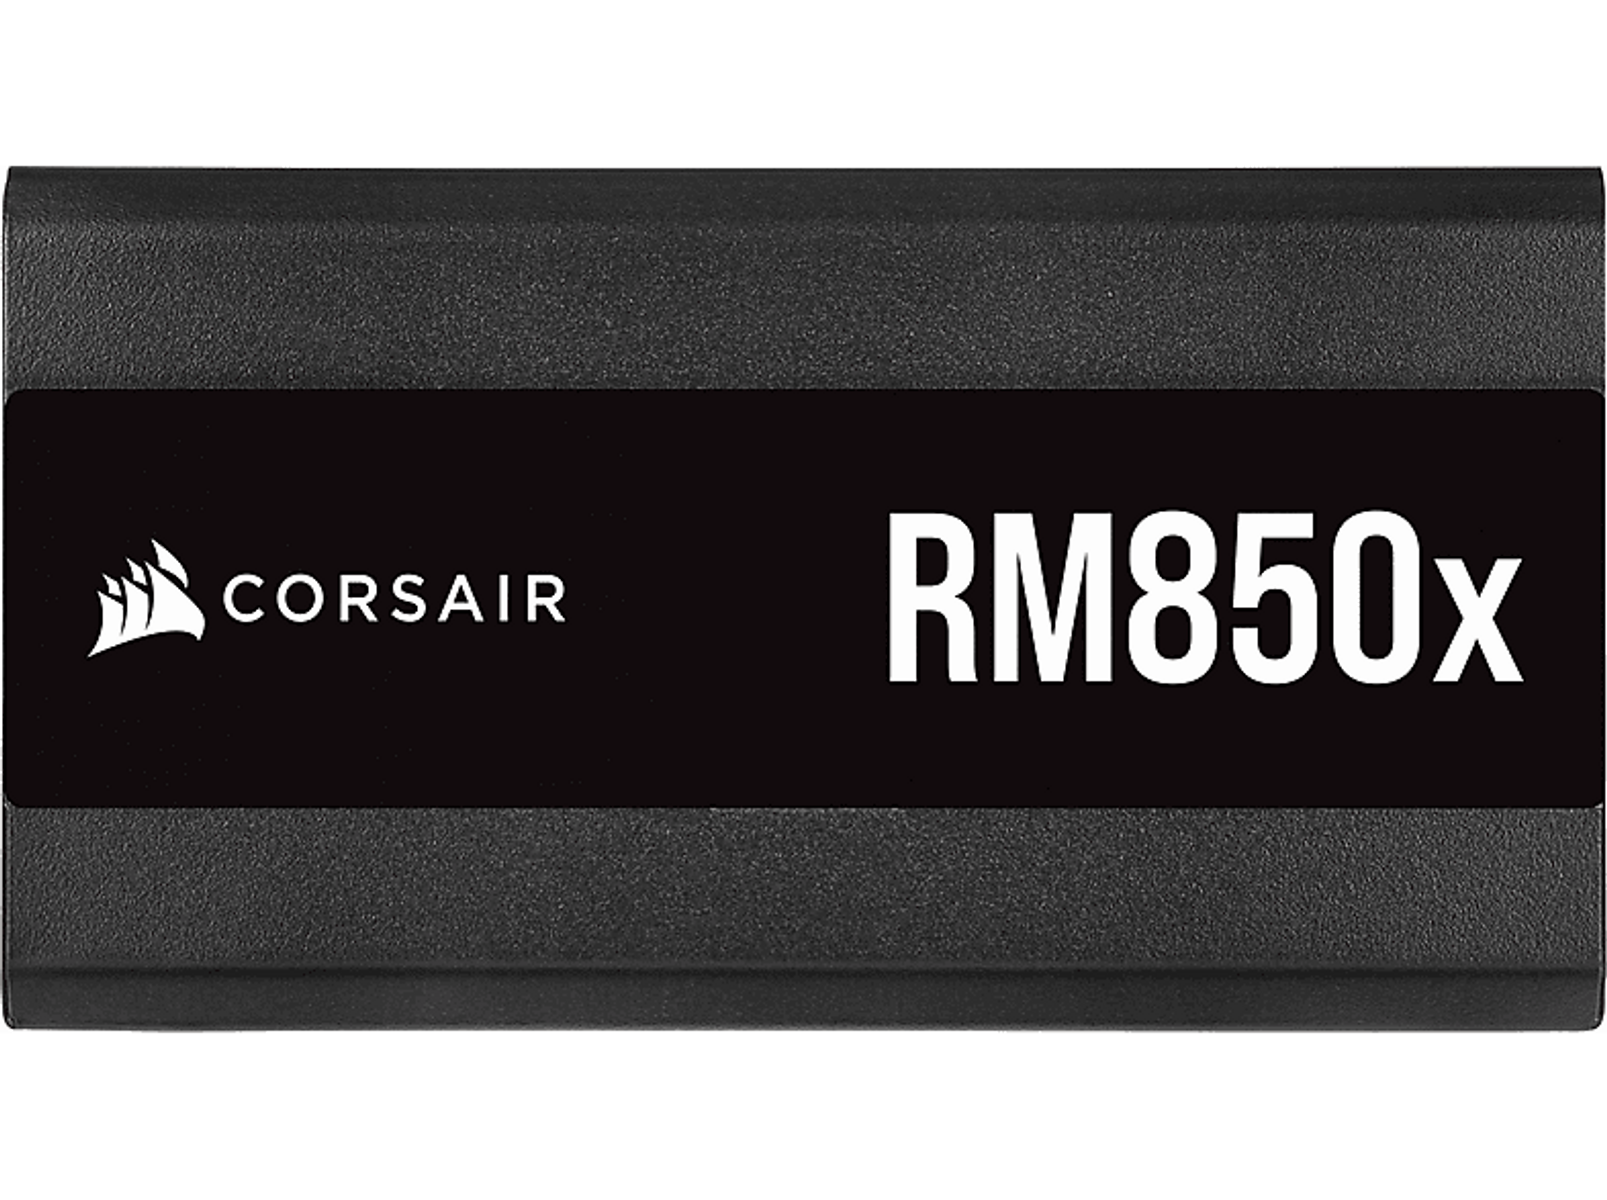 PC Watt 850 Netzteil RM850x 80 Plus Gold CORSAIR